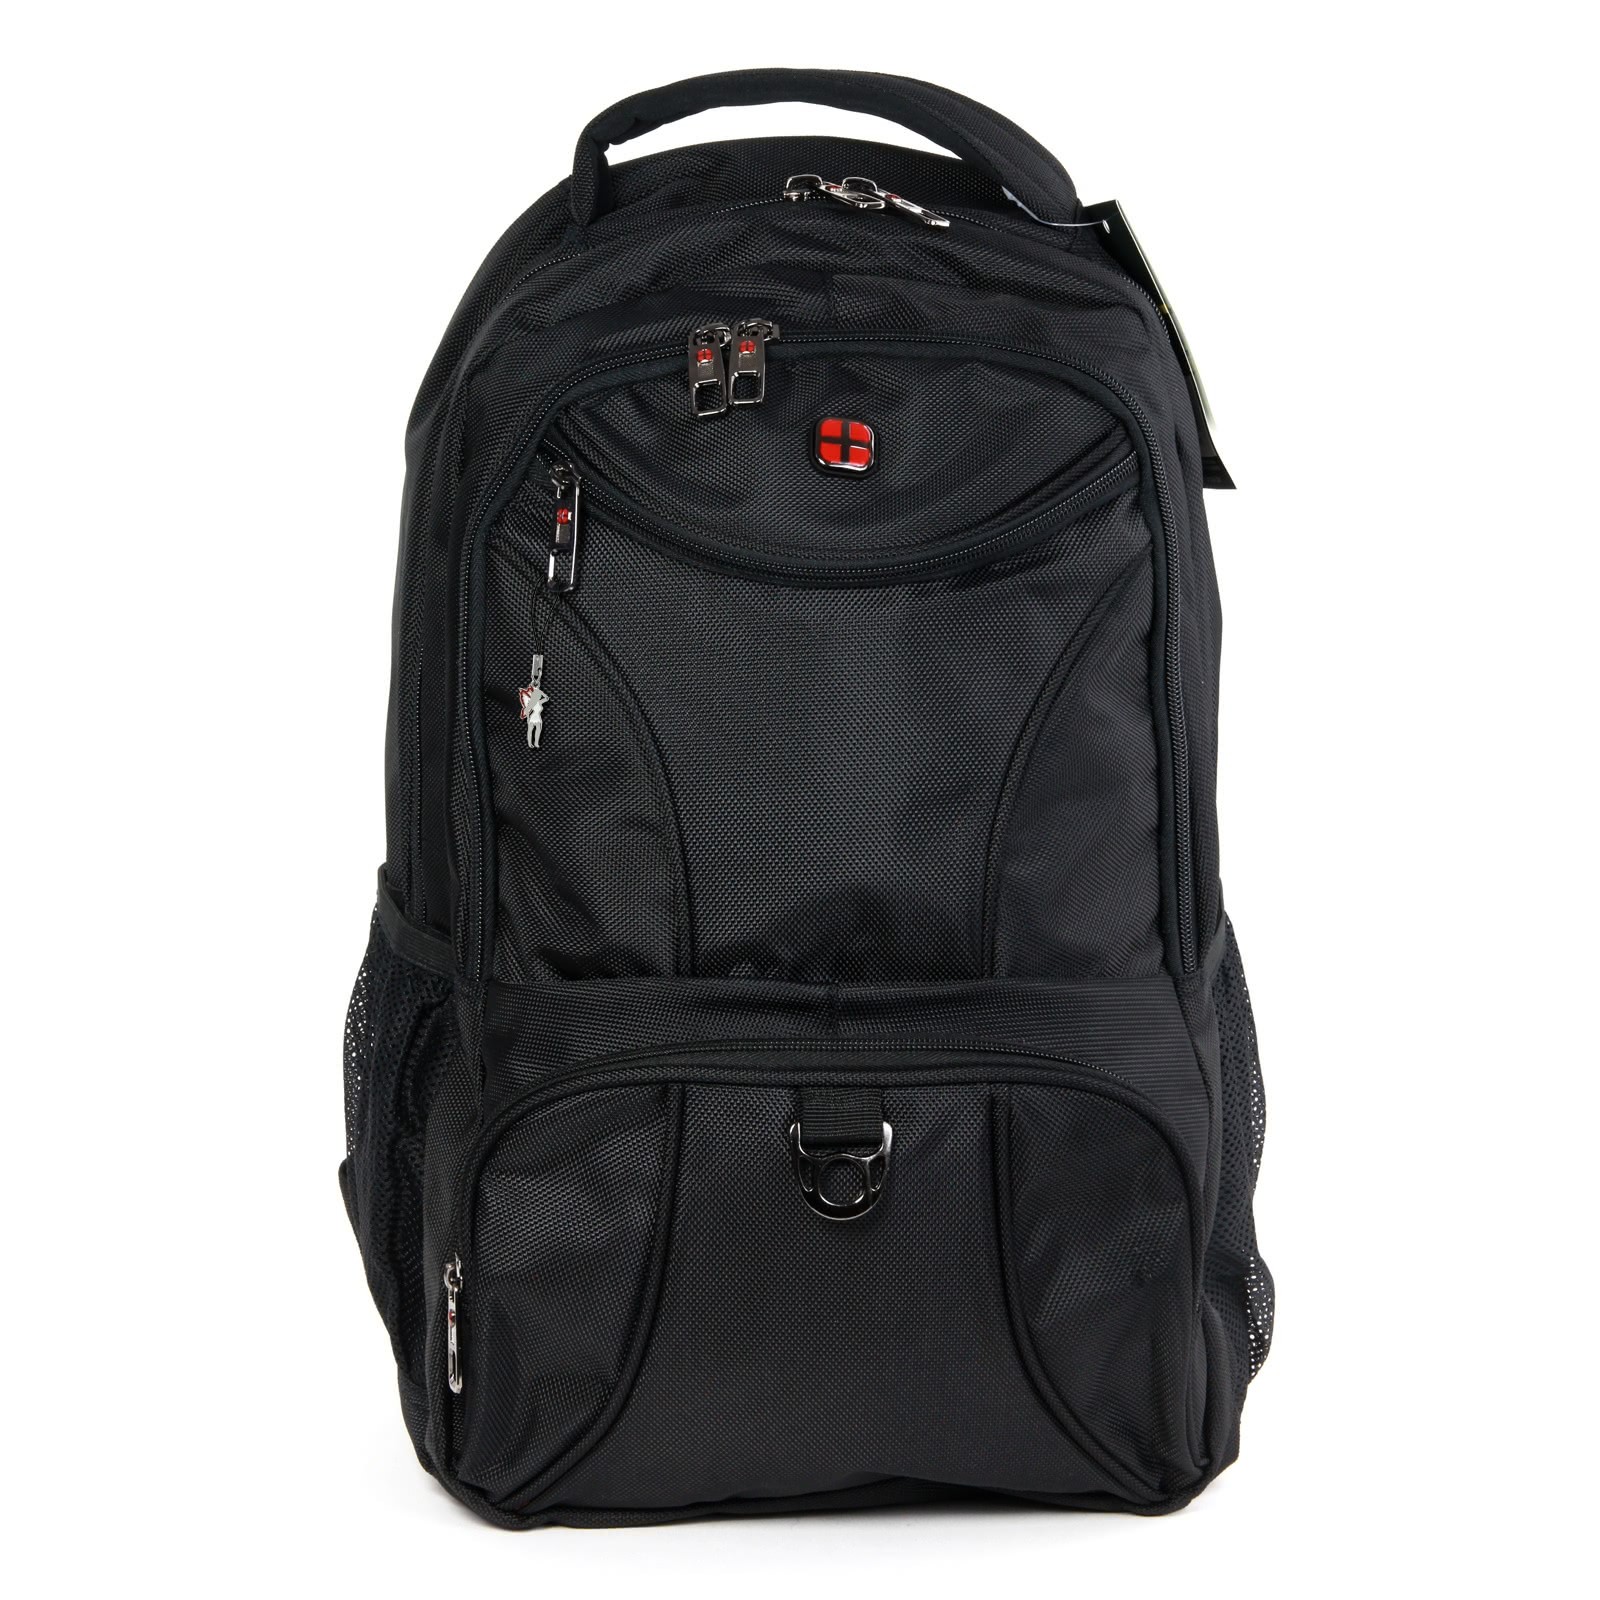 New Bags Laptoprucksack, Notebooktasche Tabletfach gepolstert schwarz OTD603S